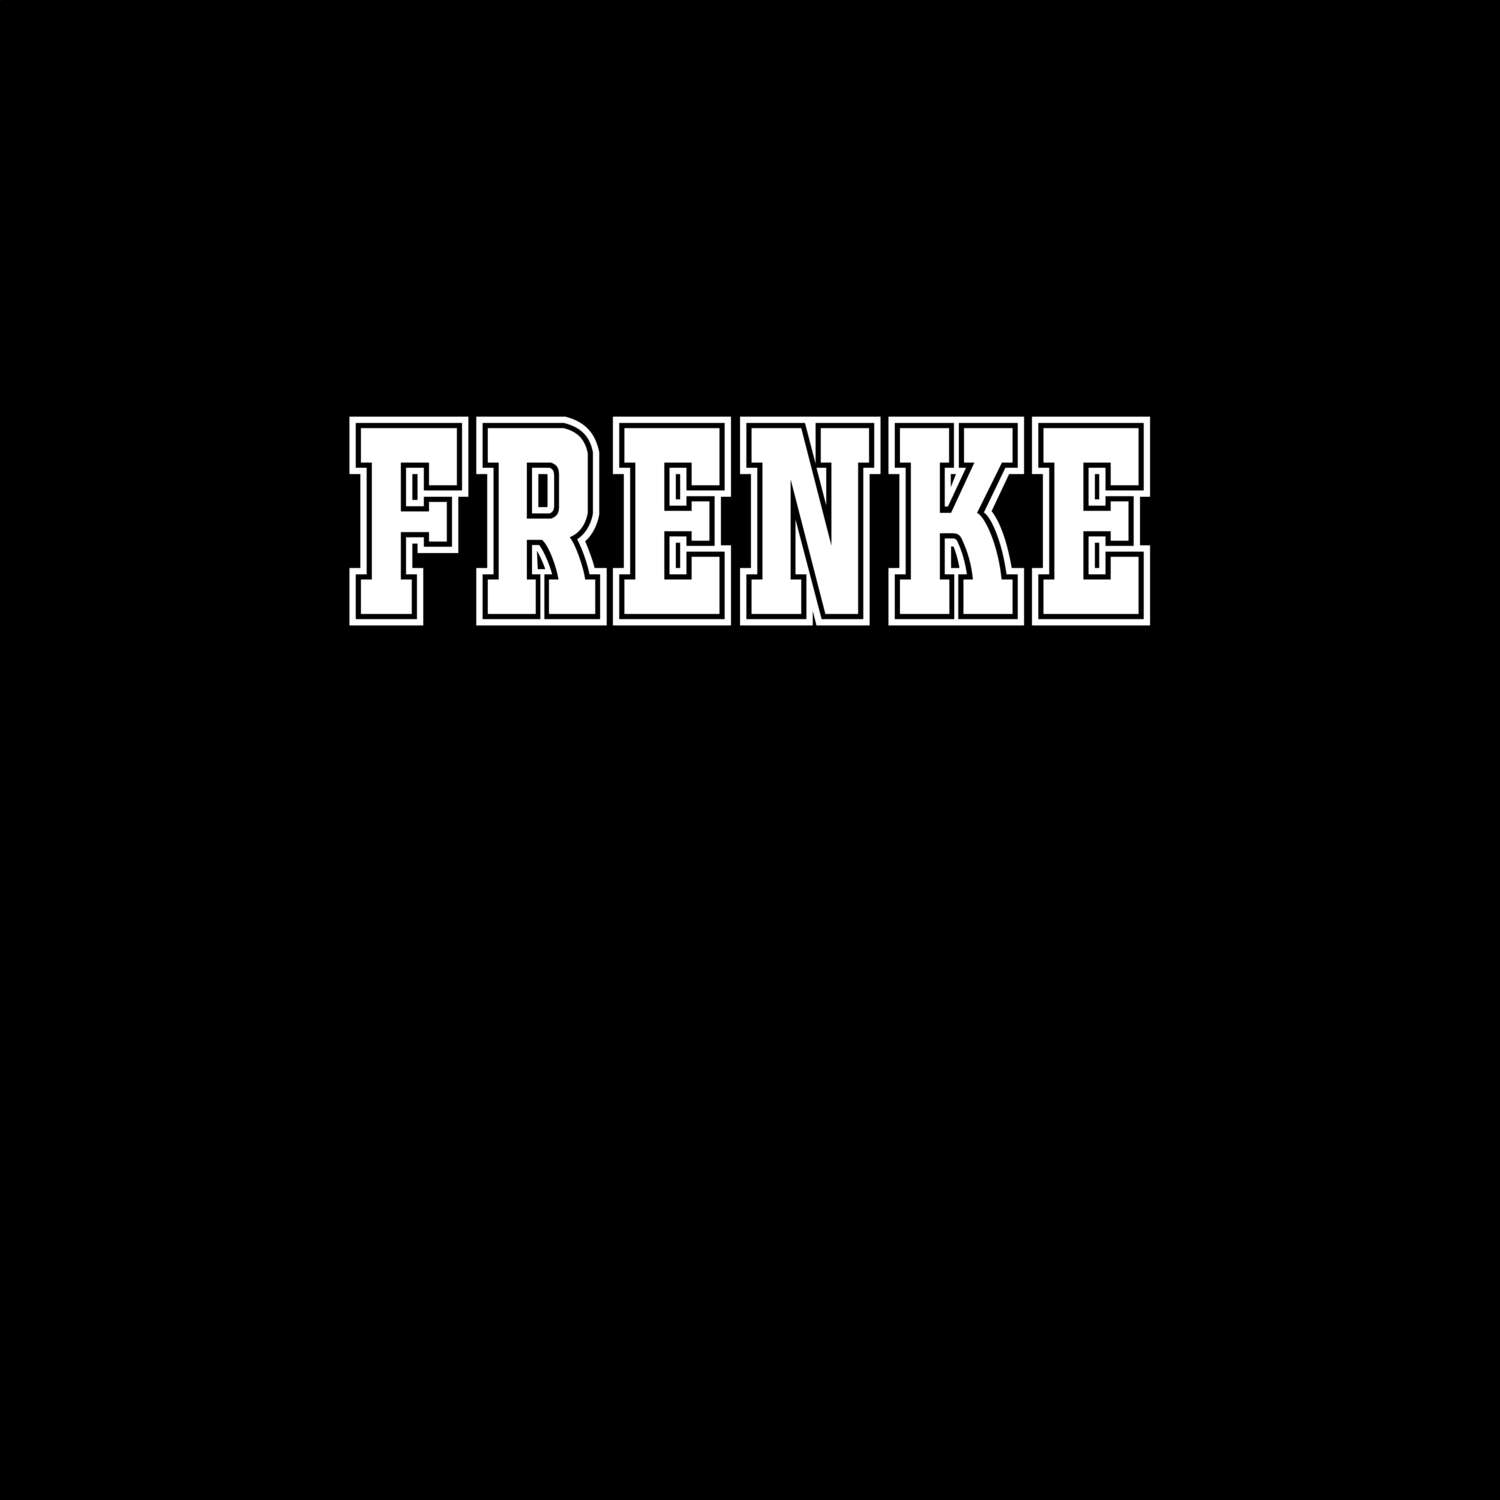 Frenke T-Shirt »Classic«